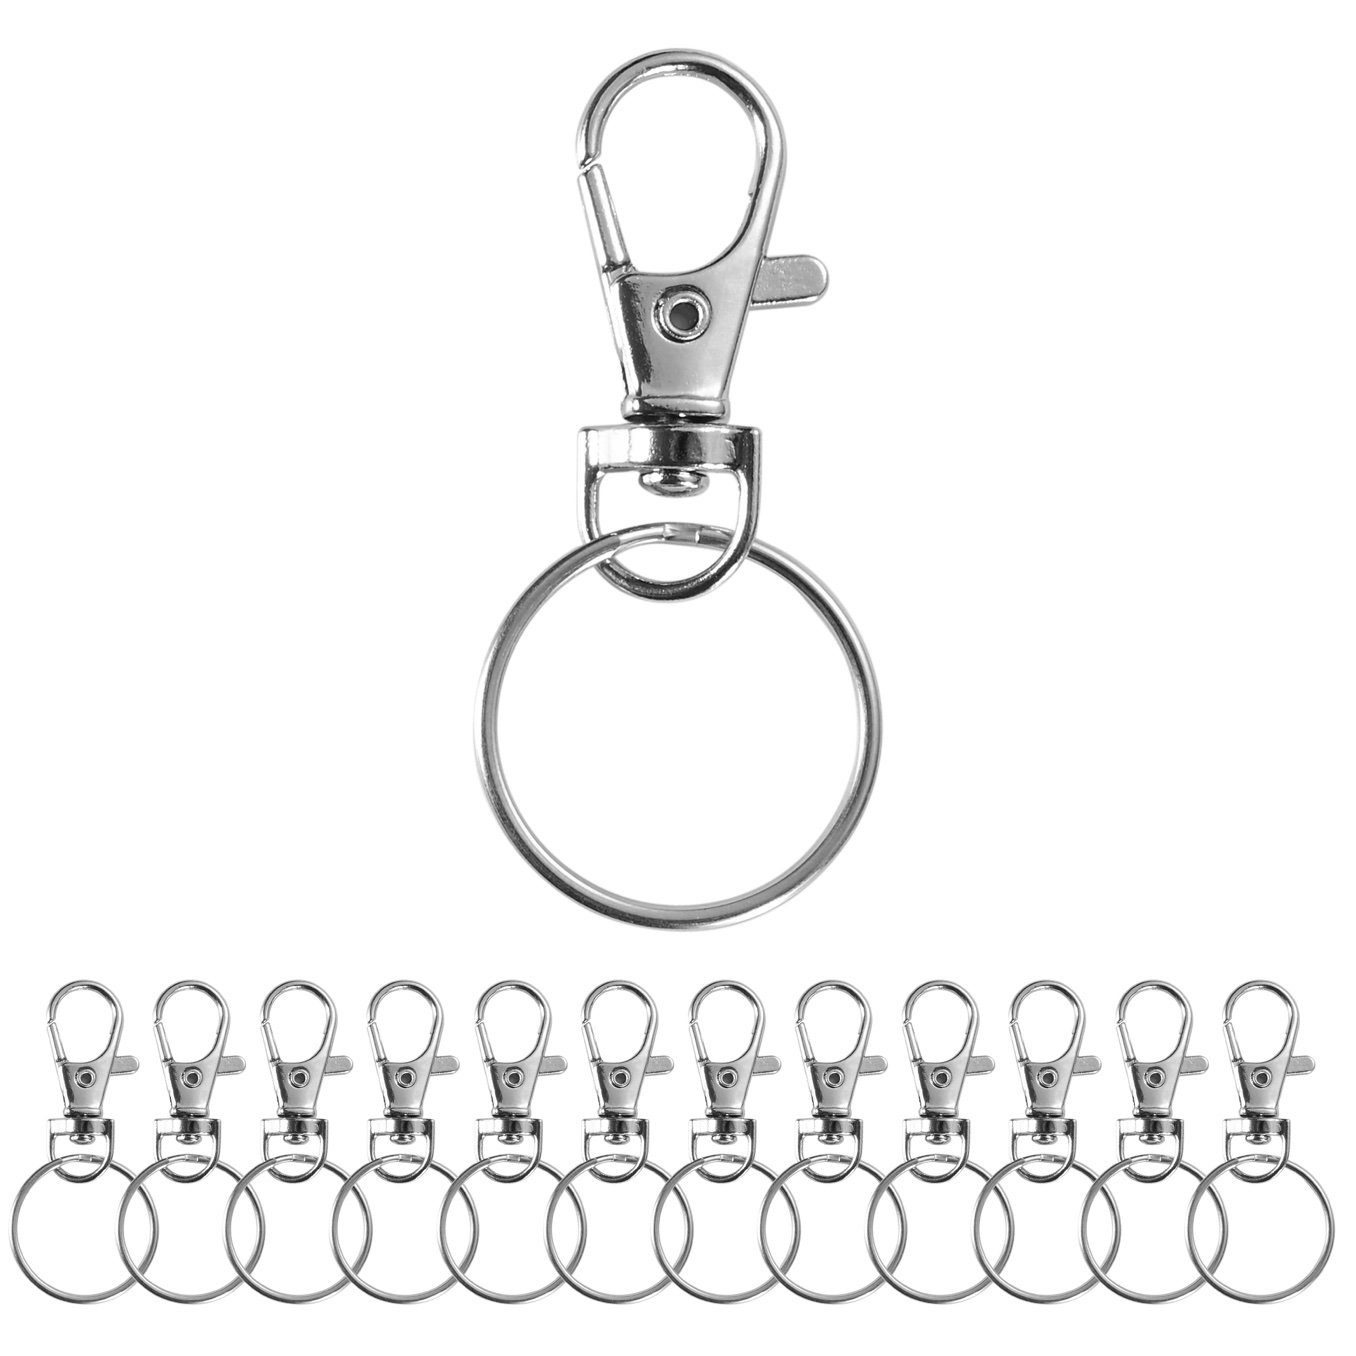 officegurus® Schlüsselanhänger Set 66x Karabiner Schlüsselanhänger - Schlüsselring Set mit Drehgelenk (Packung, 66-tlg., 66x Schlüsselanhänger mit Karabiner), mit Drehgelenk